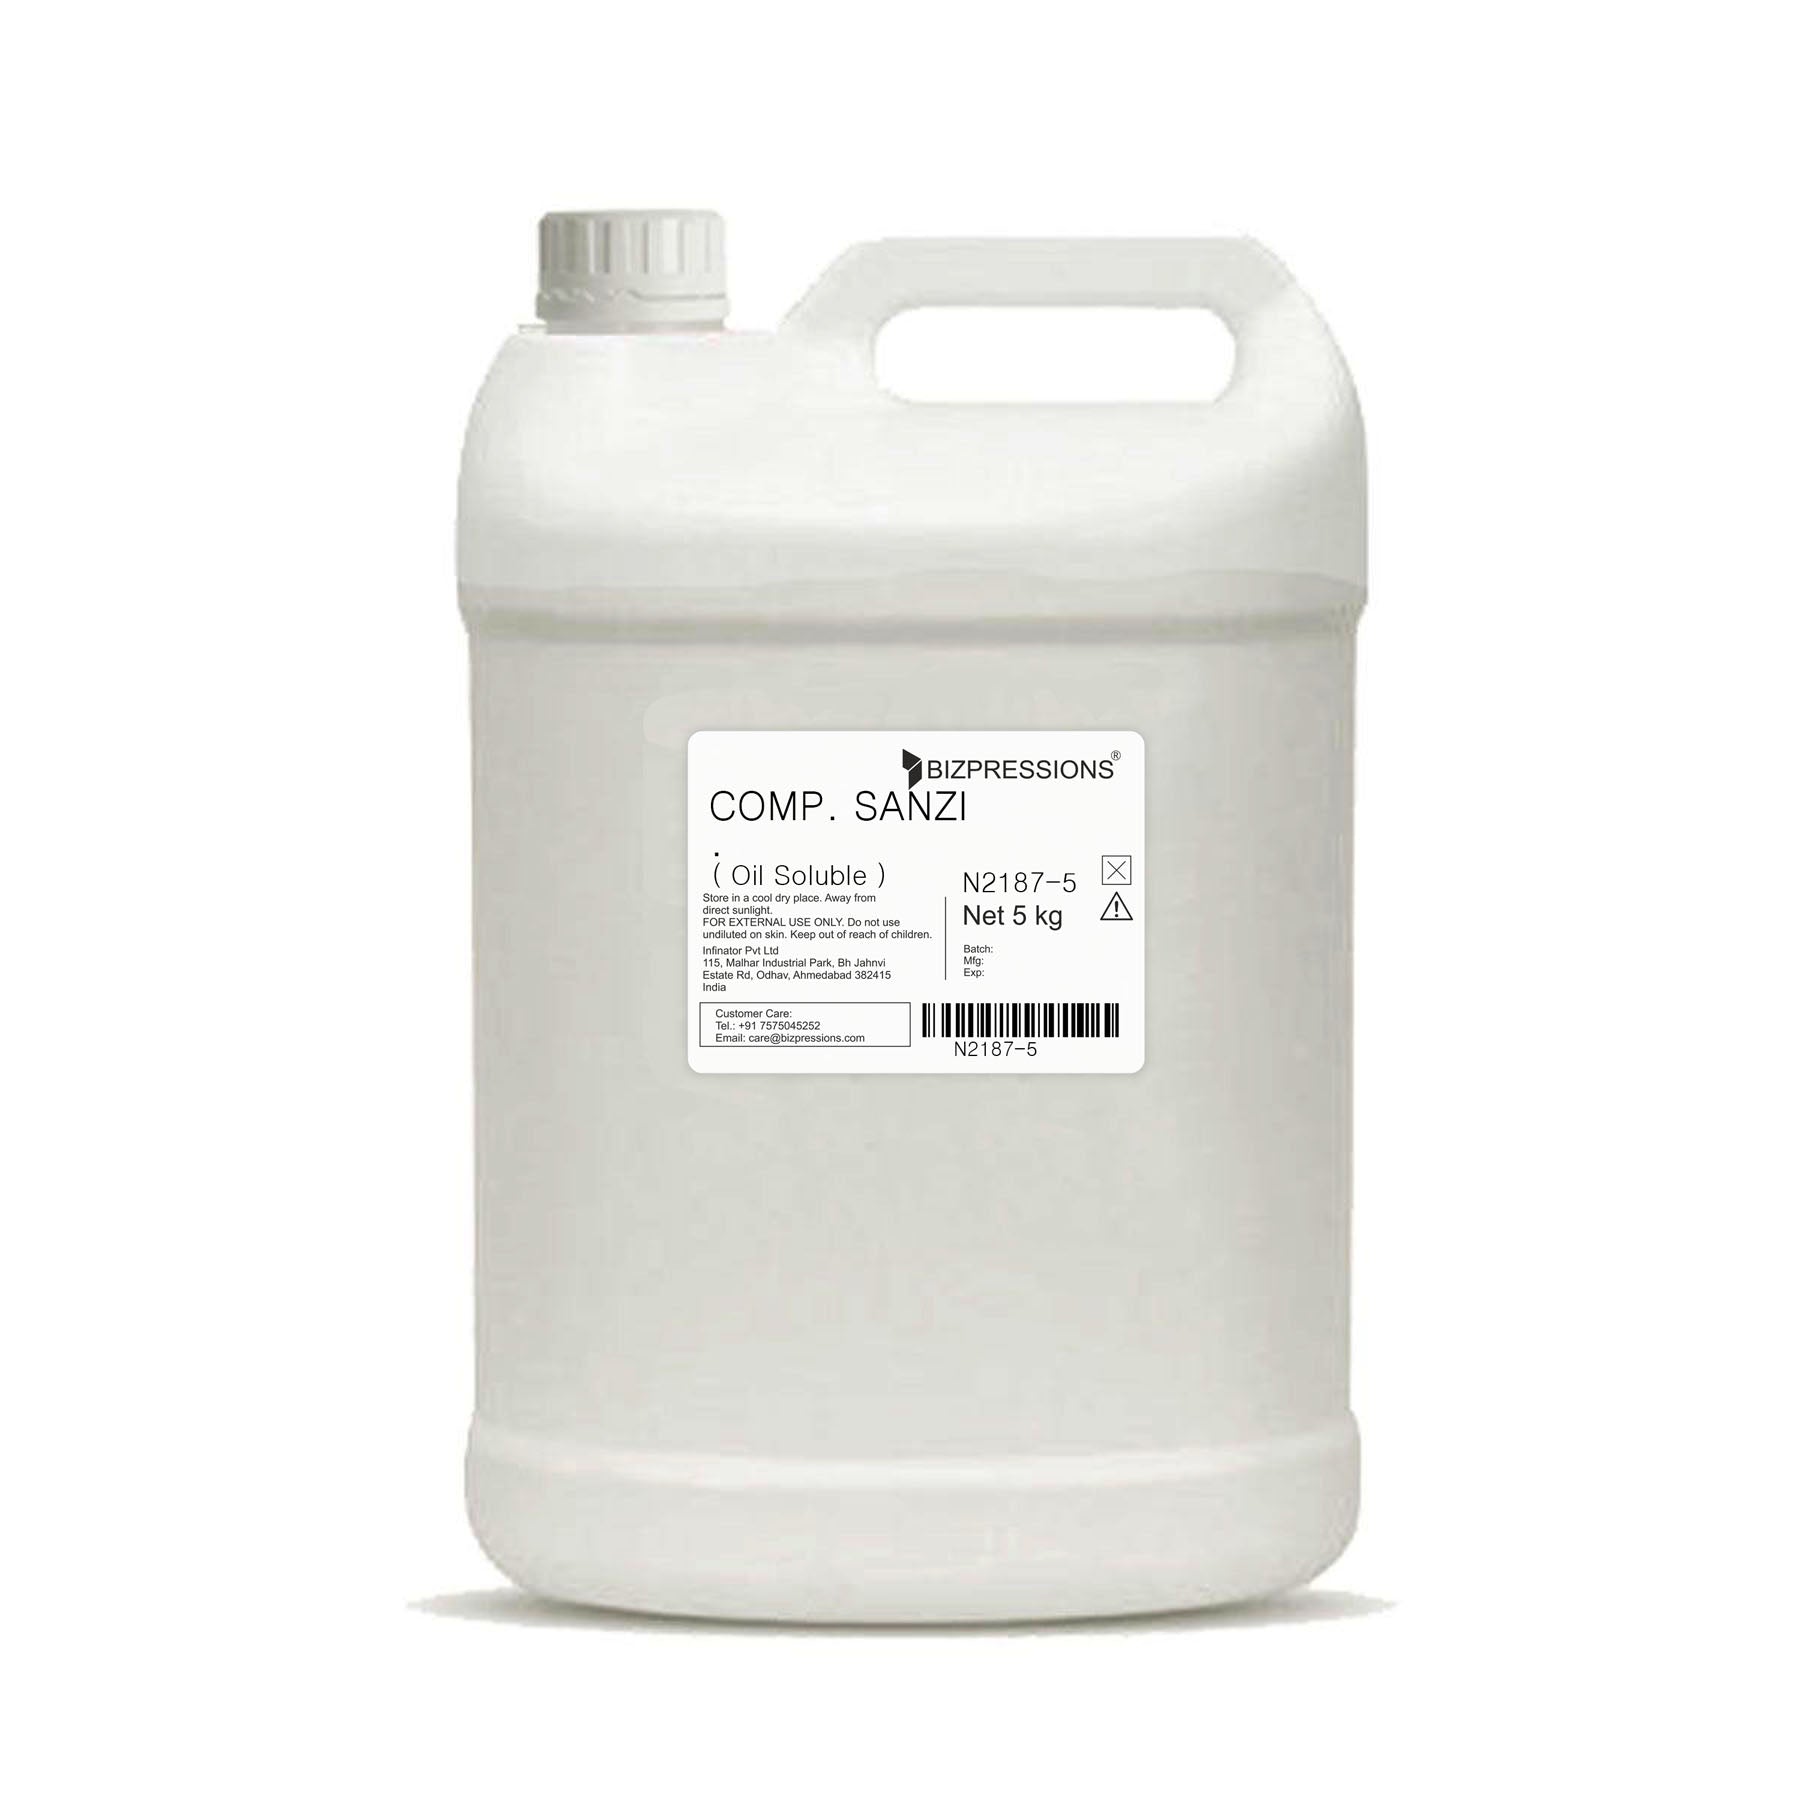 COMP. SANZI - Fragrance ( Oil Soluble ) - 5 kg